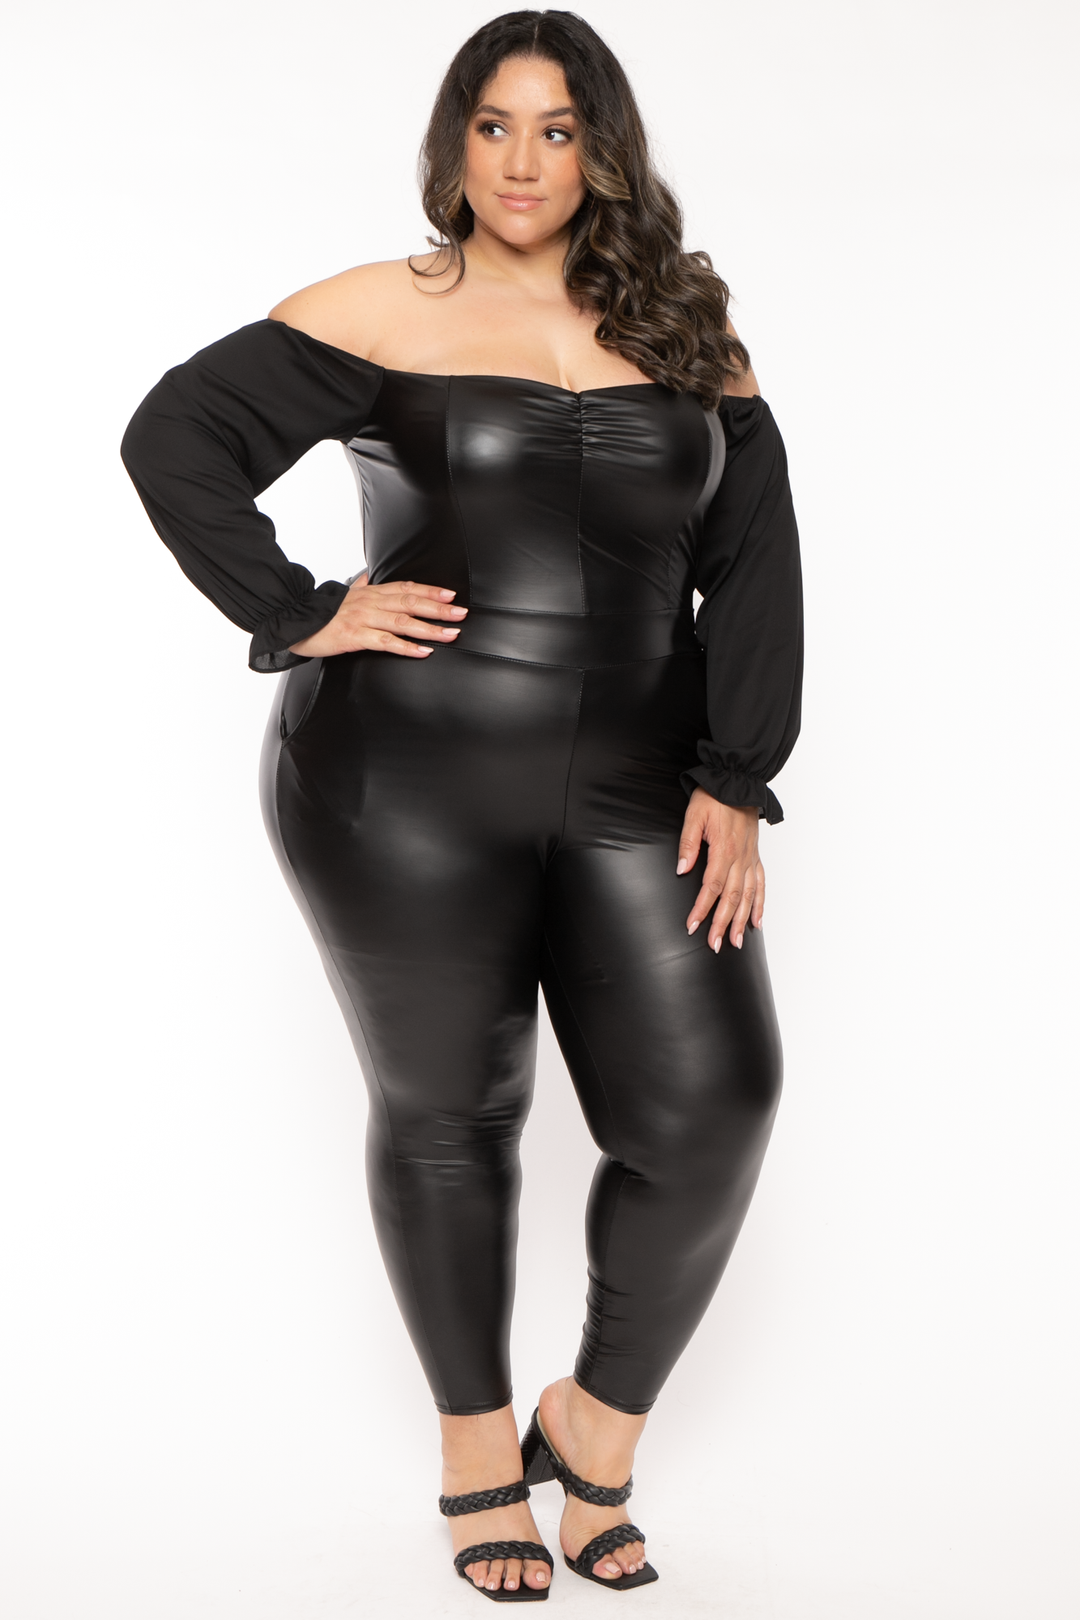 NBXNZWF Plus Size Sexy Jumpsuit For Curvy Women Open Back